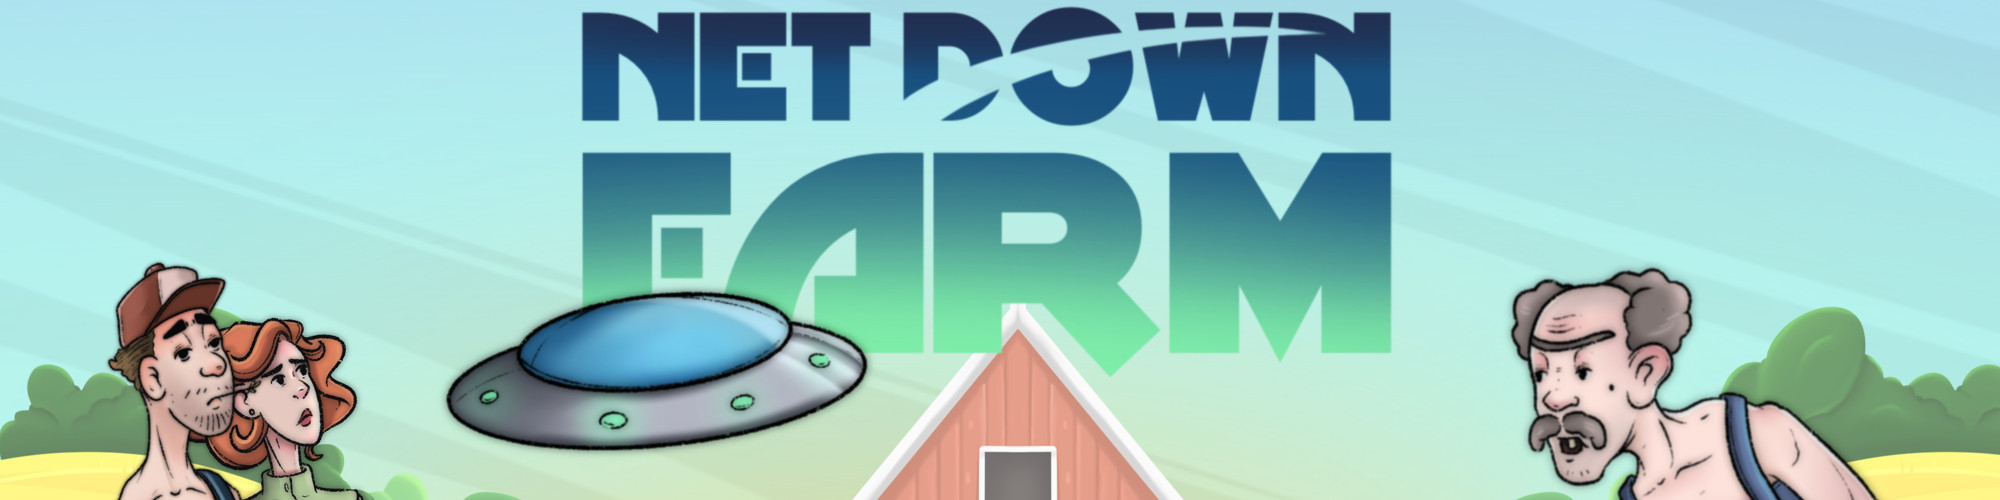 NetDown Farm